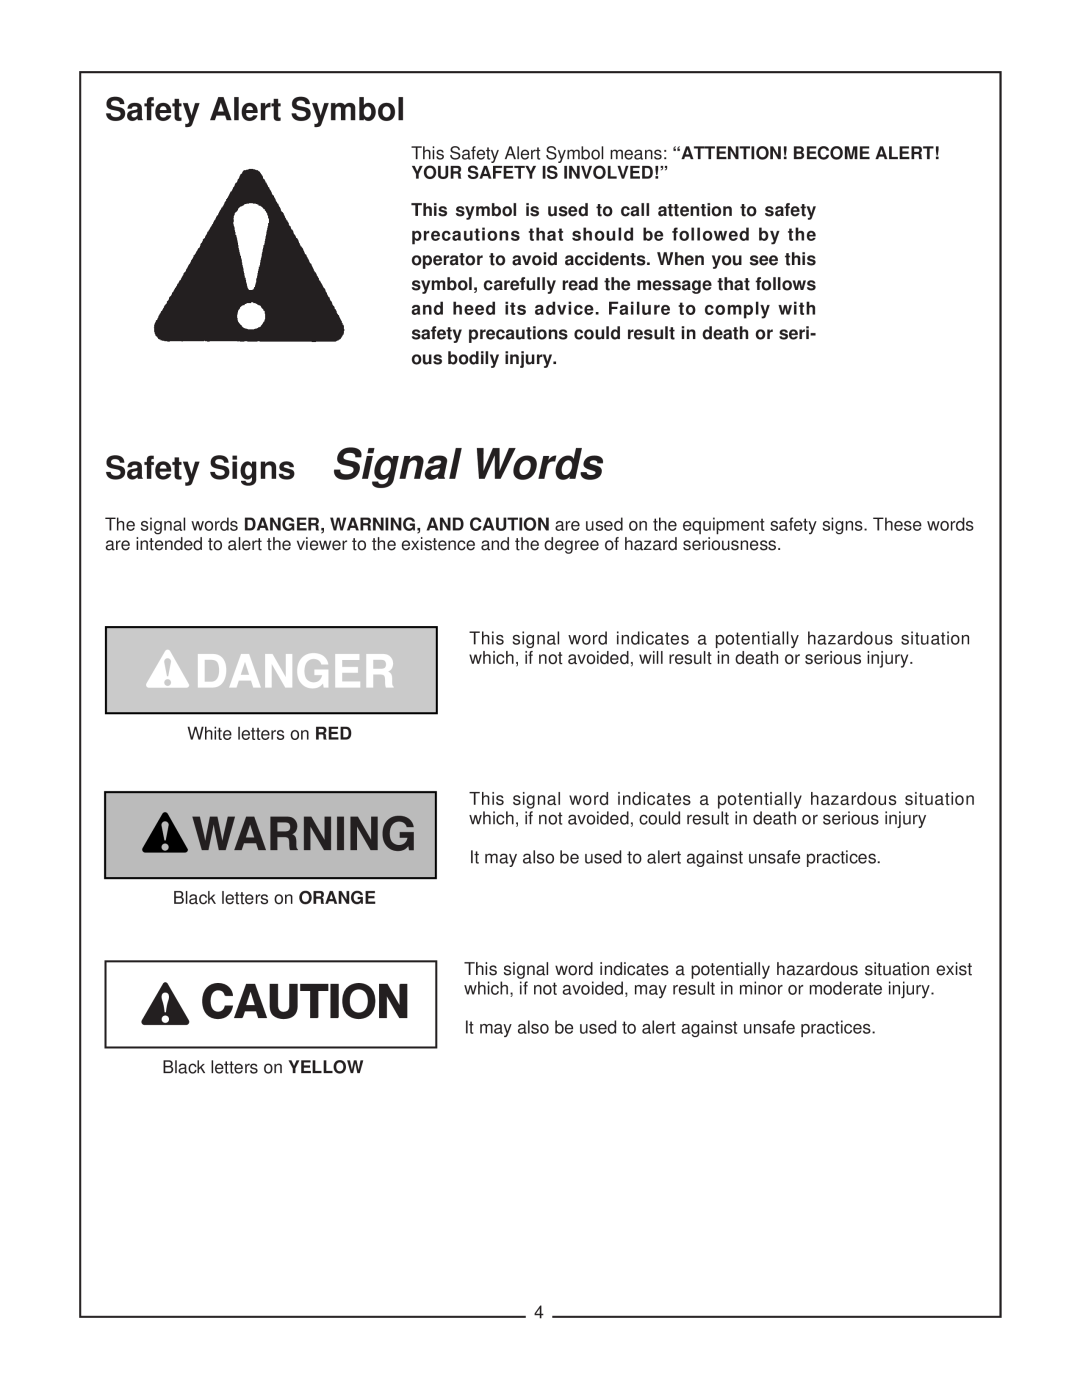 Bush Hog RFM 60 manual Safety Alert Symbol, Safety Signs Signal Words, Your Safety Is Involved!” 